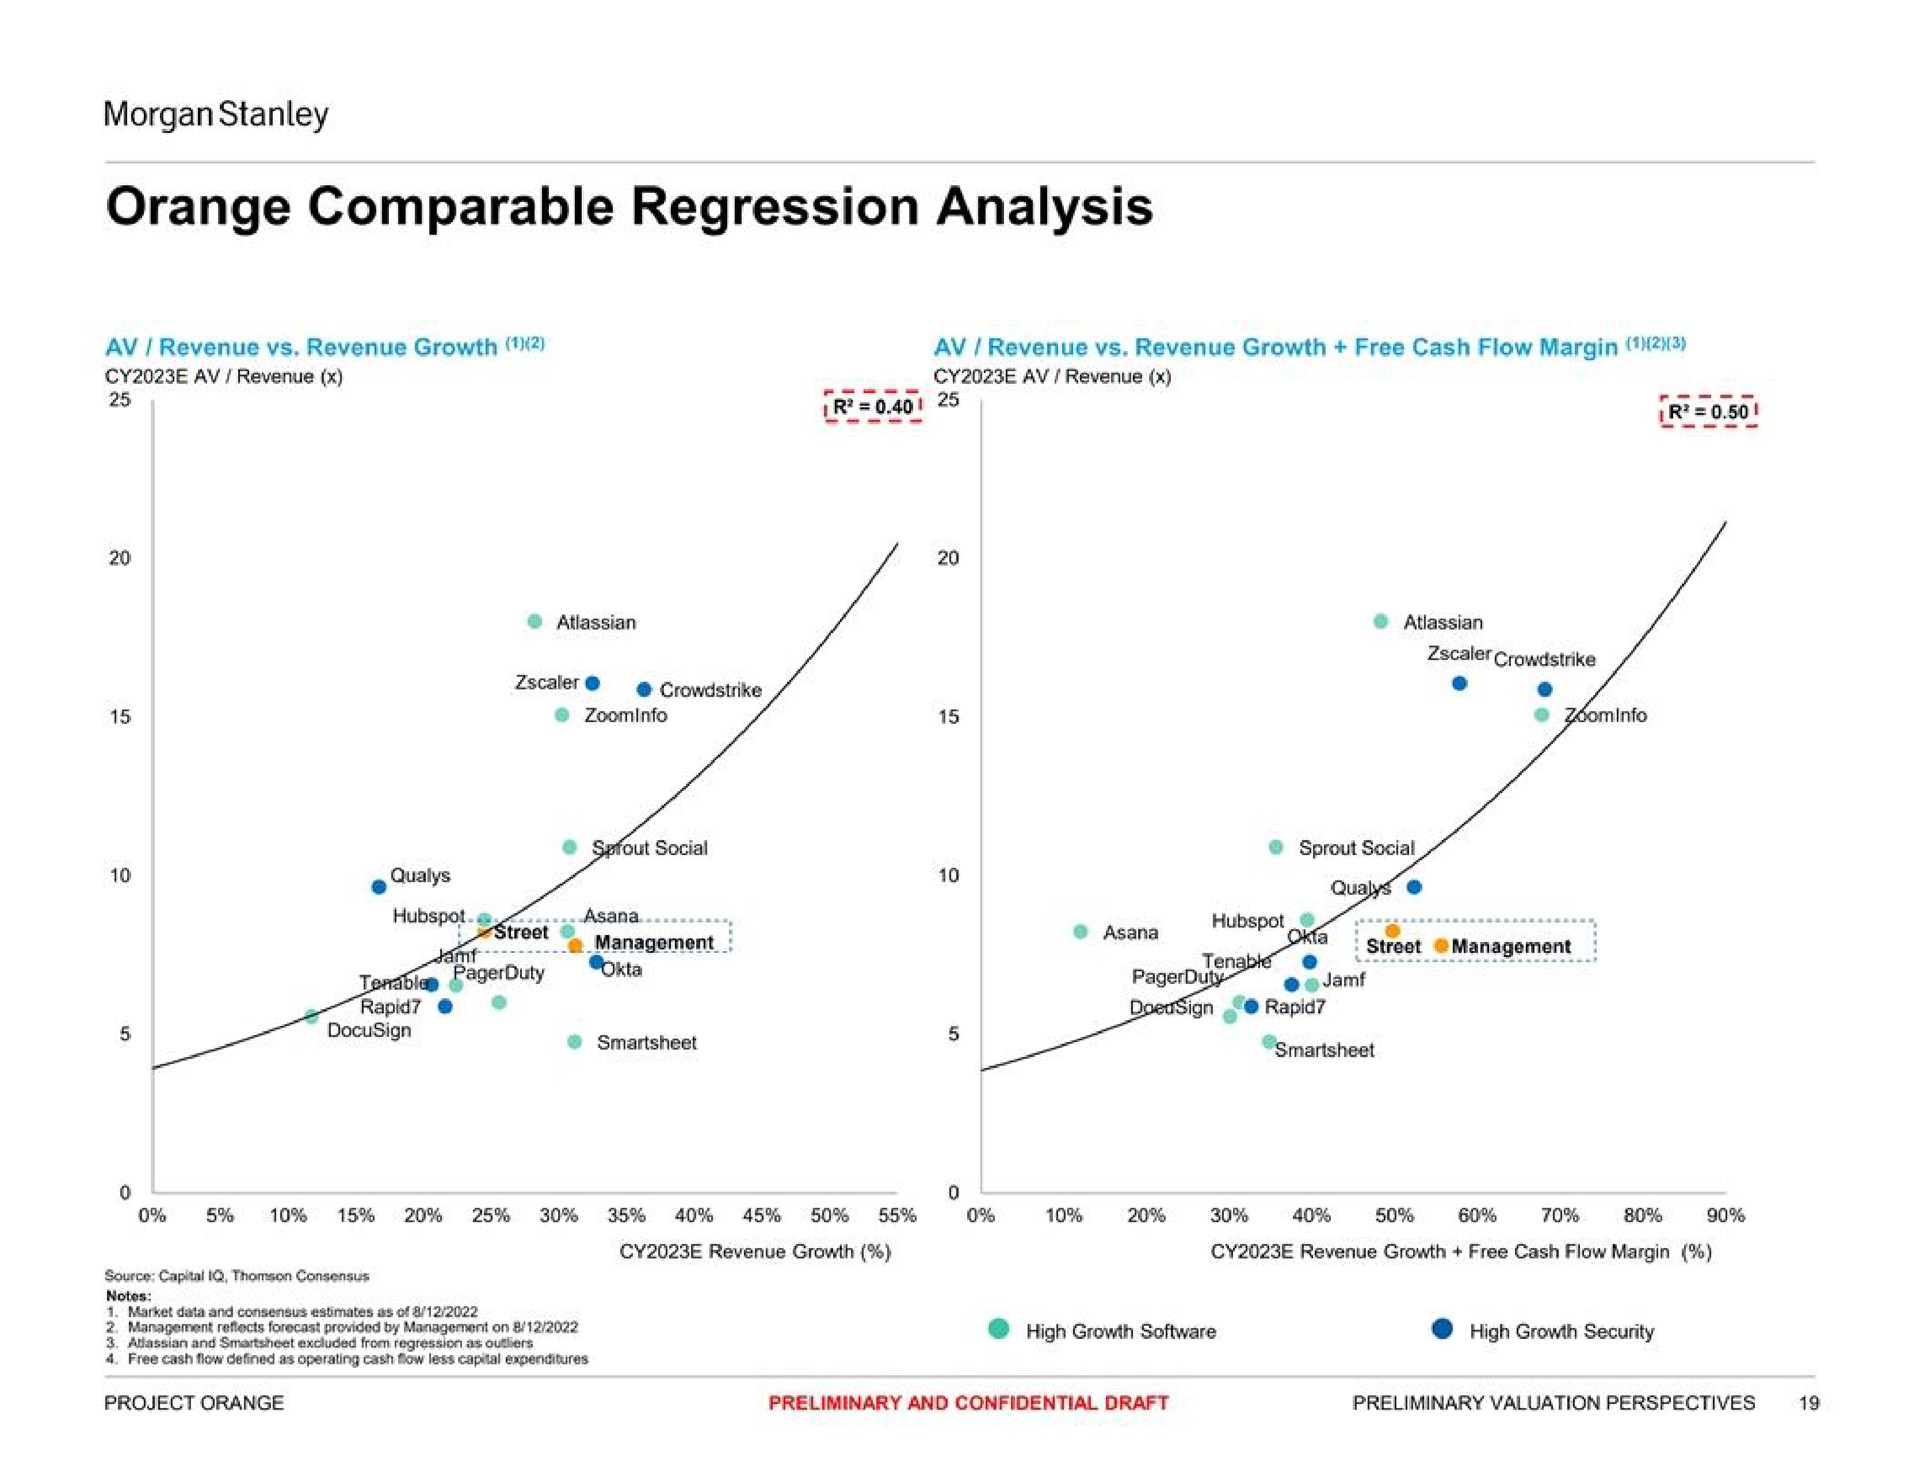 orange comparable regression analysis | Morgan Stanley